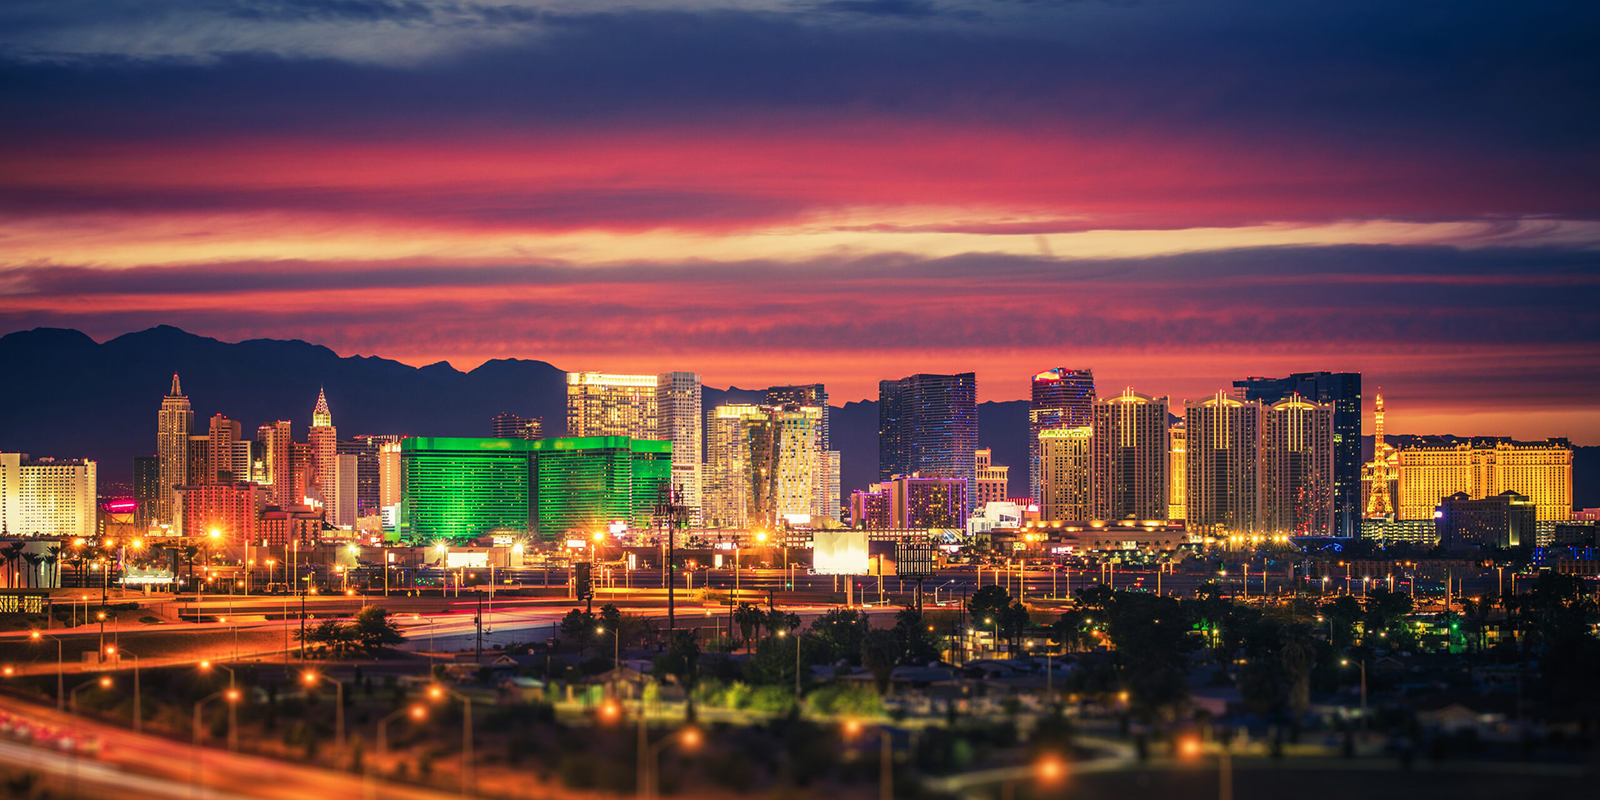 The skyline of Las Vegas during sunset.